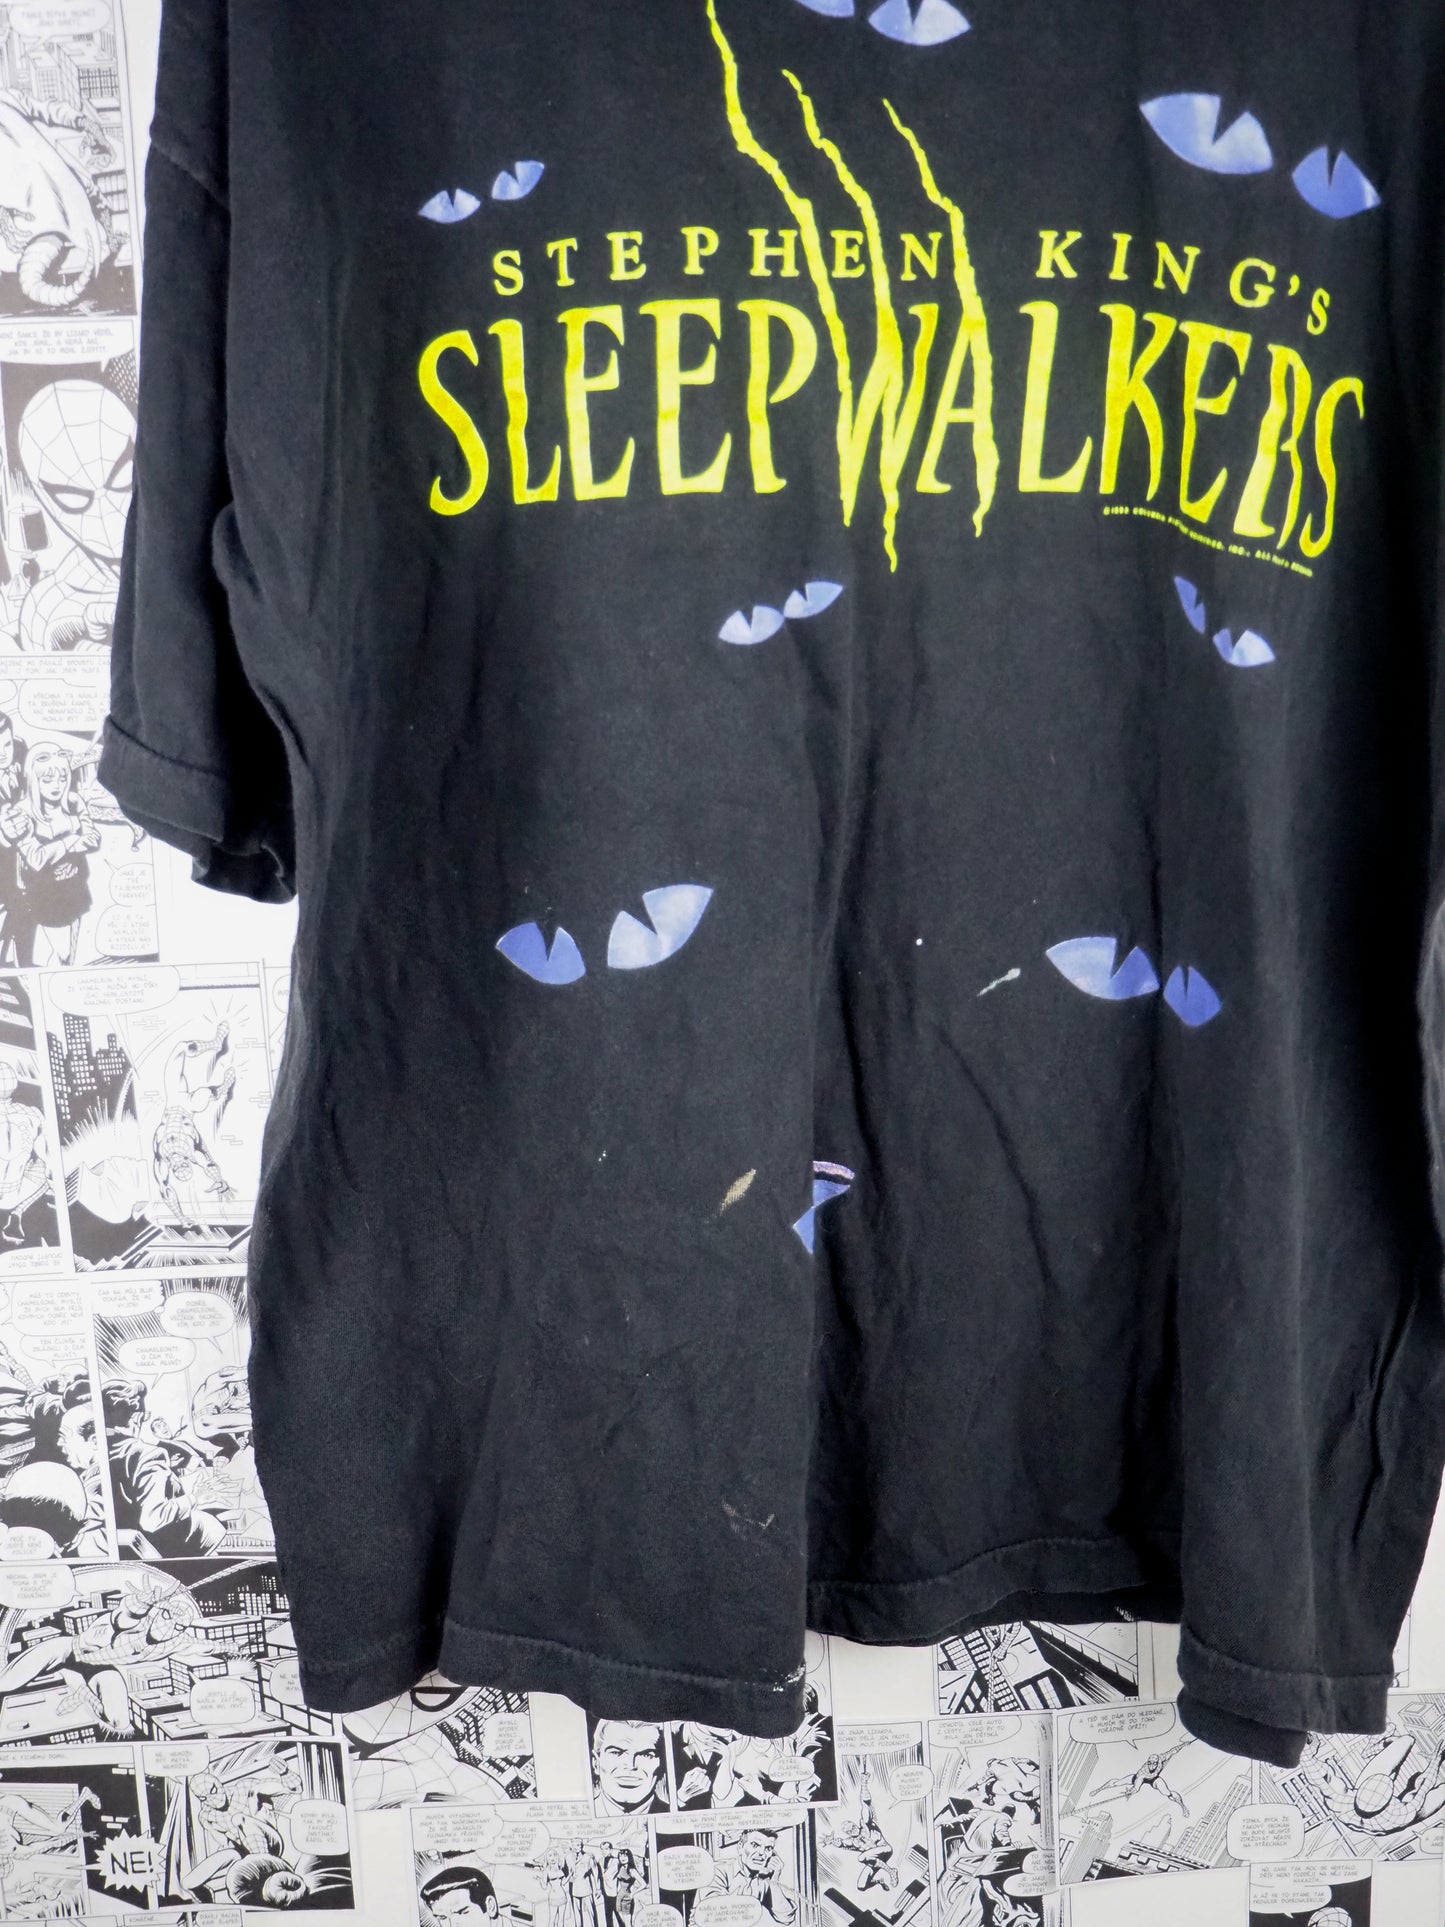 Vintage Stephen King's "Sleepwalkers" 1992 t-shirt - size XL